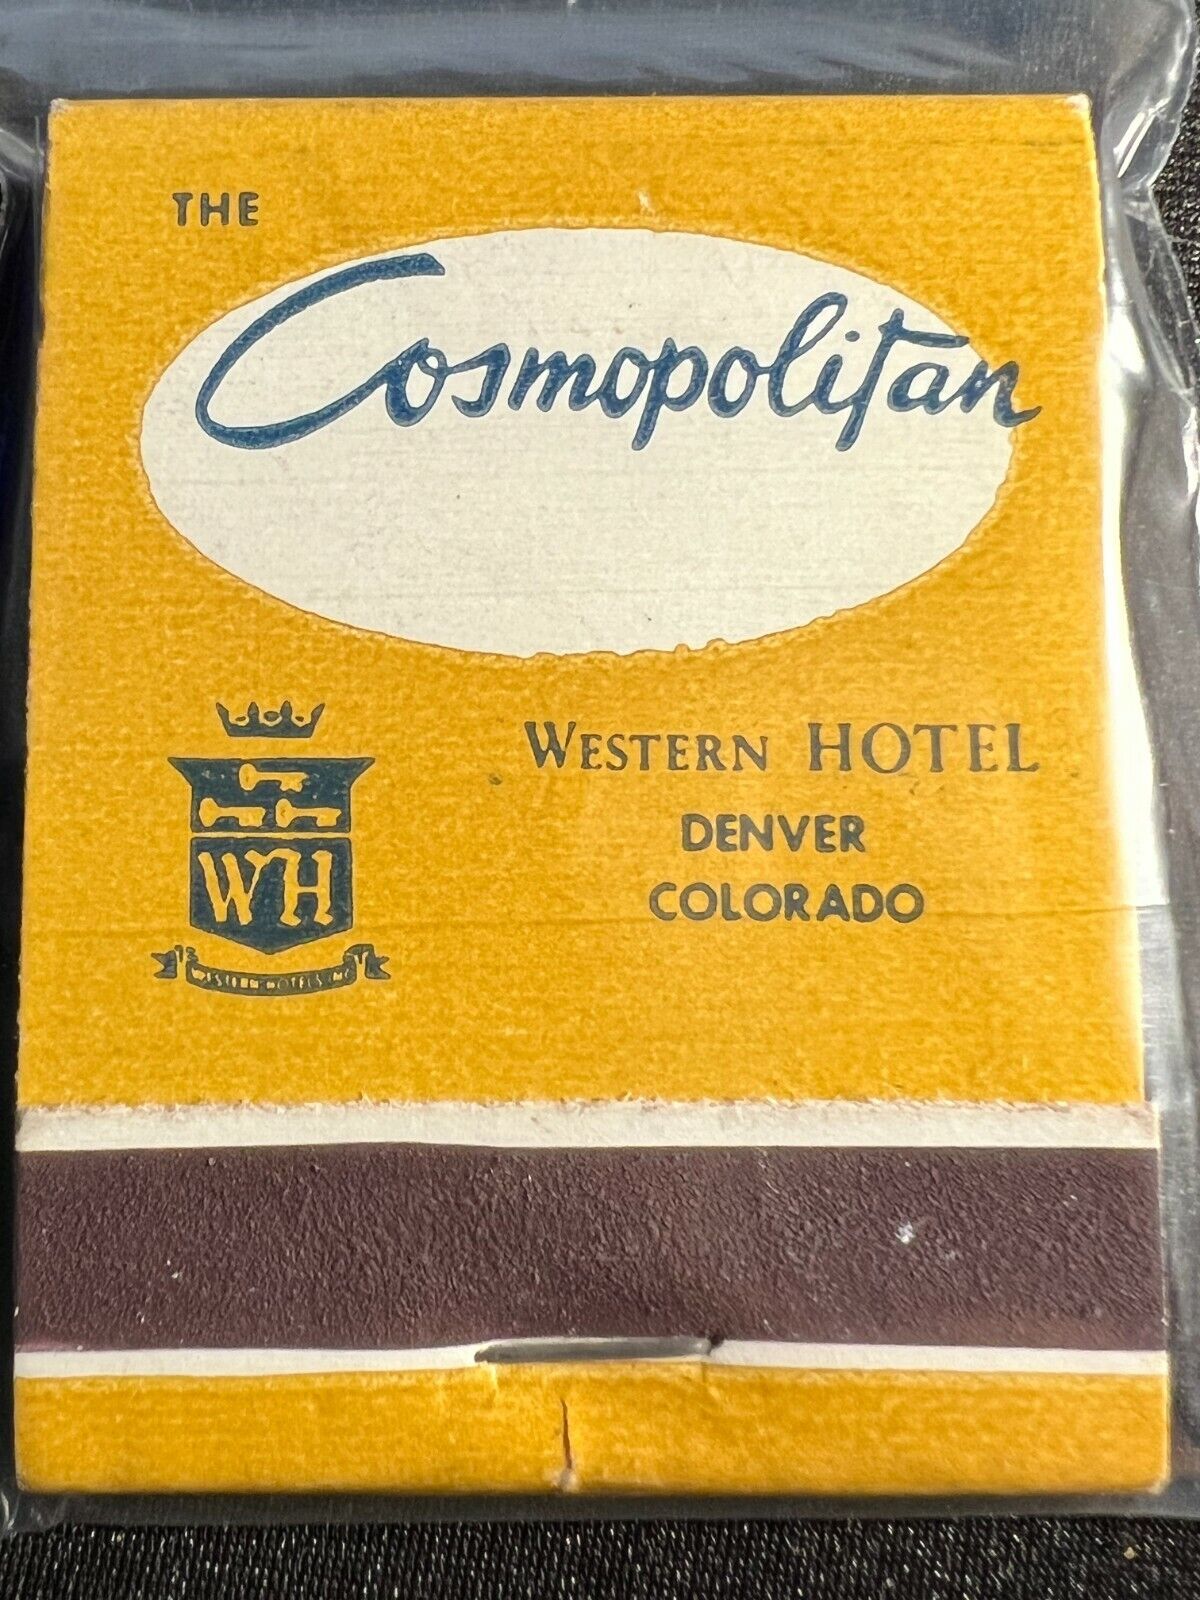 VINTAGE MATCHBOOK - THE COSMOPOLITAN HOTEL - DENVER, COLORADO - UNSTRUCK